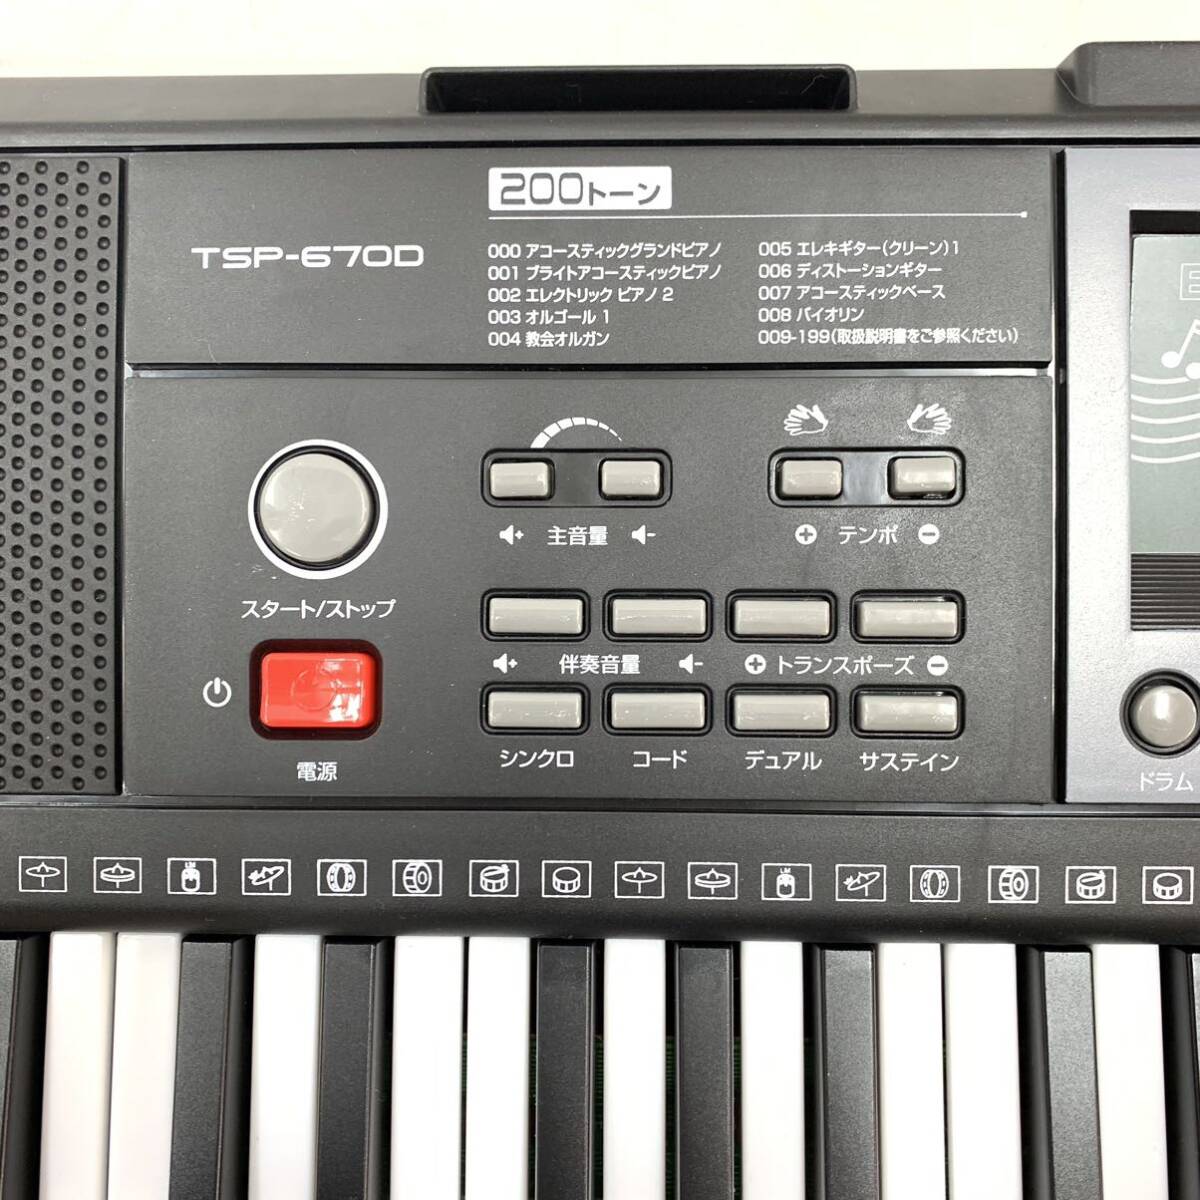 FN12146L 夢グループ 電子ピアノ TSP-670D ピアノ ガイド機能付き マイク付き 音楽 楽器 鍵盤楽器 歌 キーボード _画像4